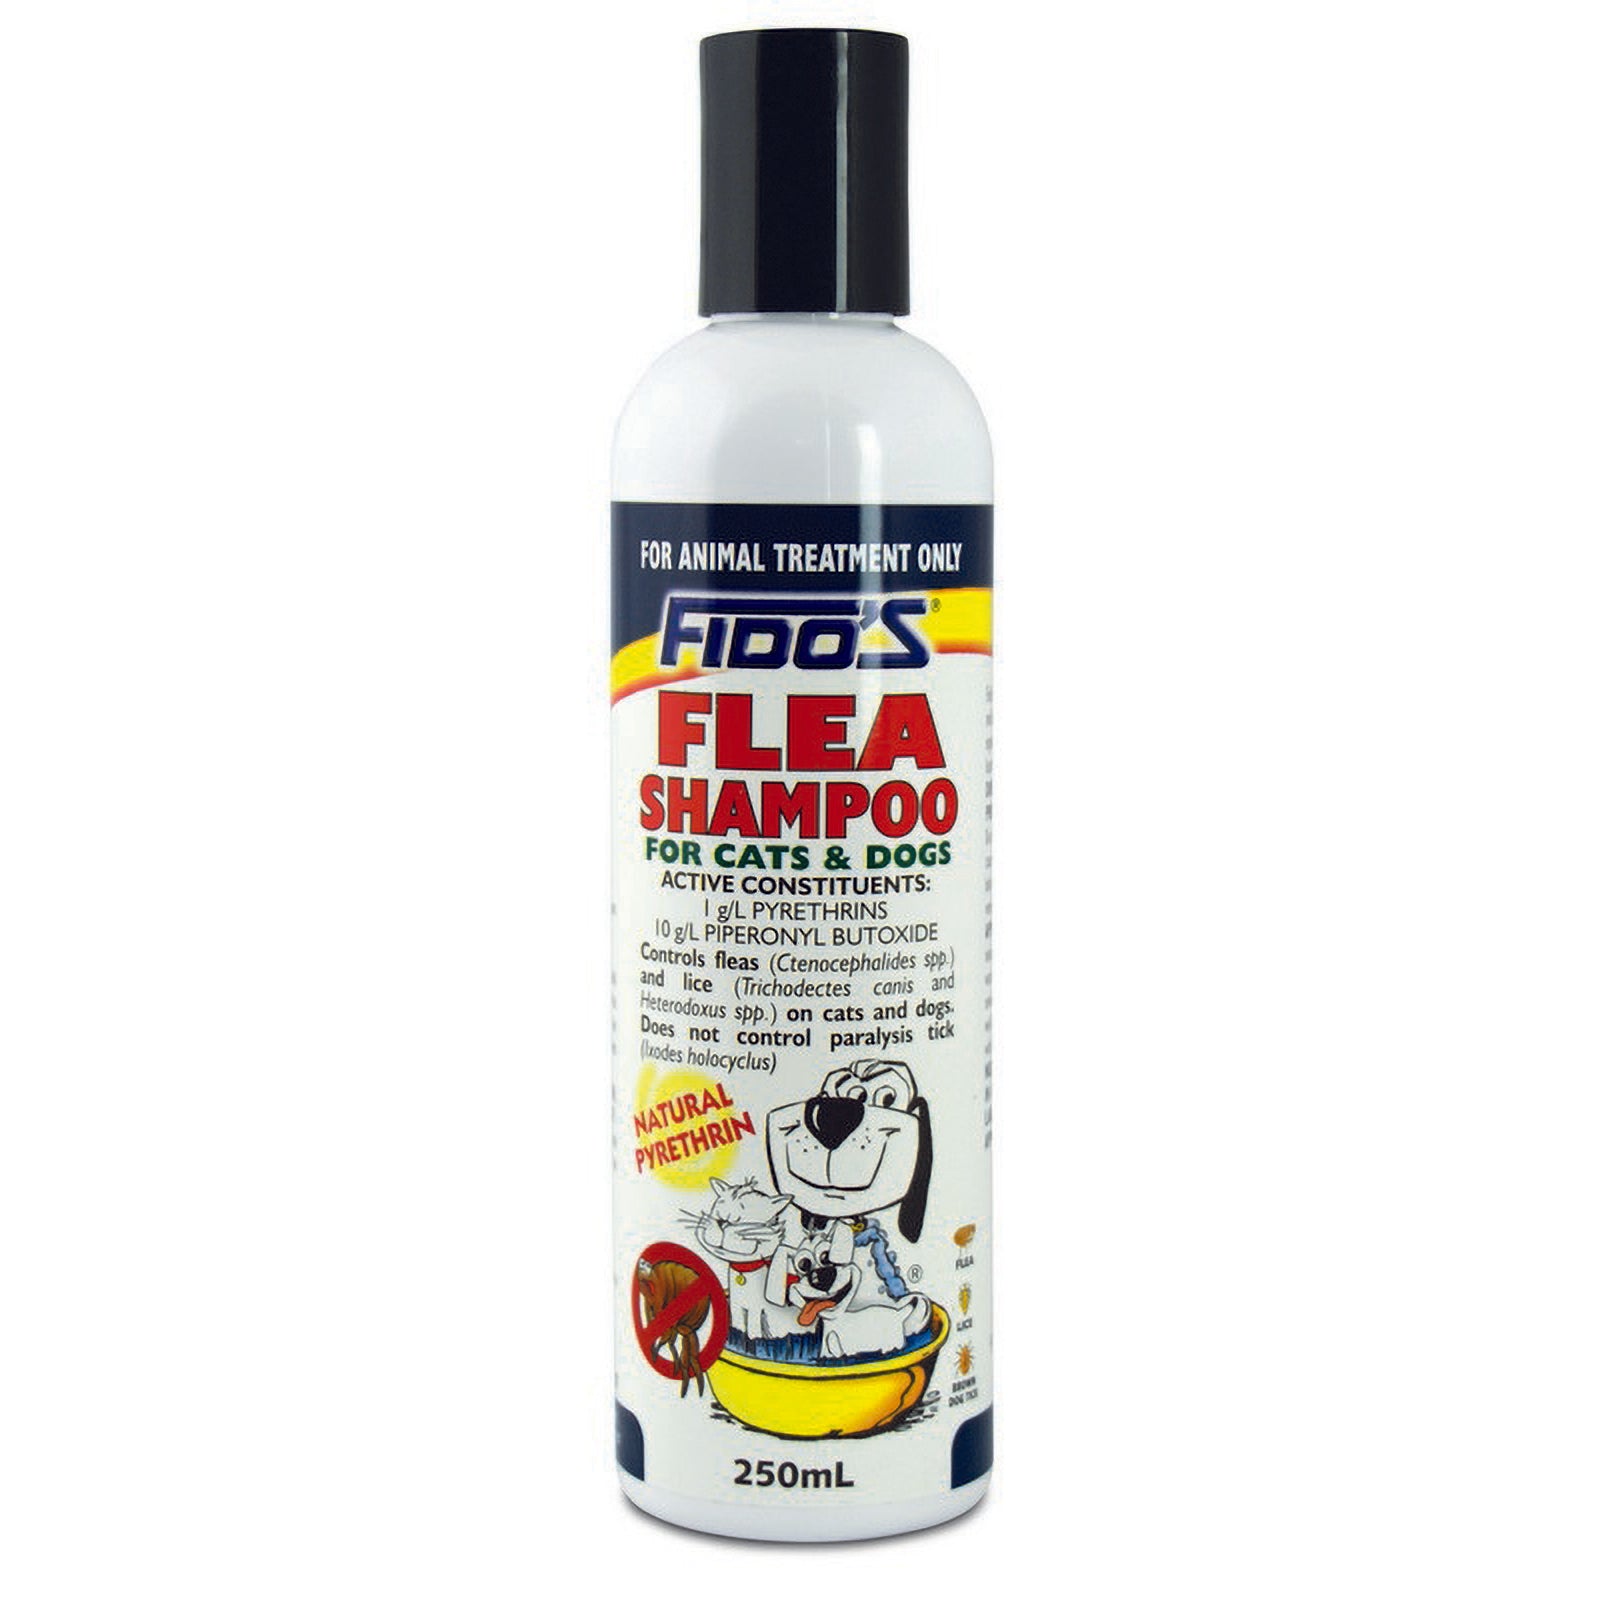 Fido's Flea Shampoo for Dogs & Cats